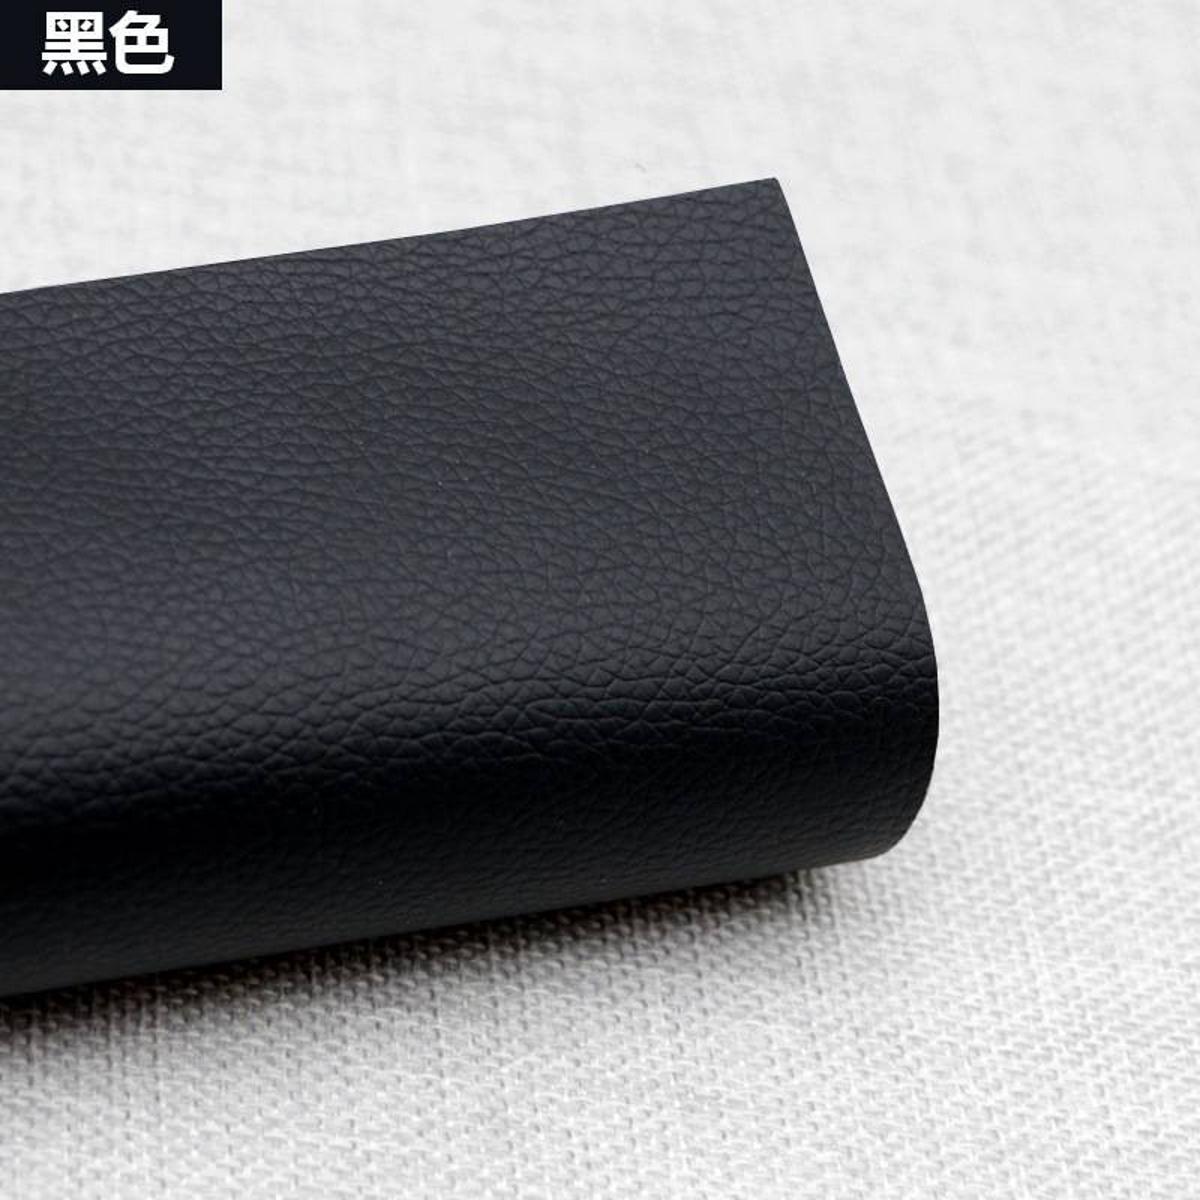 Leather Kpop Photocard Binder, 4-Pocket Photocard Holder, Kpop Zipper Binder  Case, 25 Sleeves, Black - Yahoo Shopping